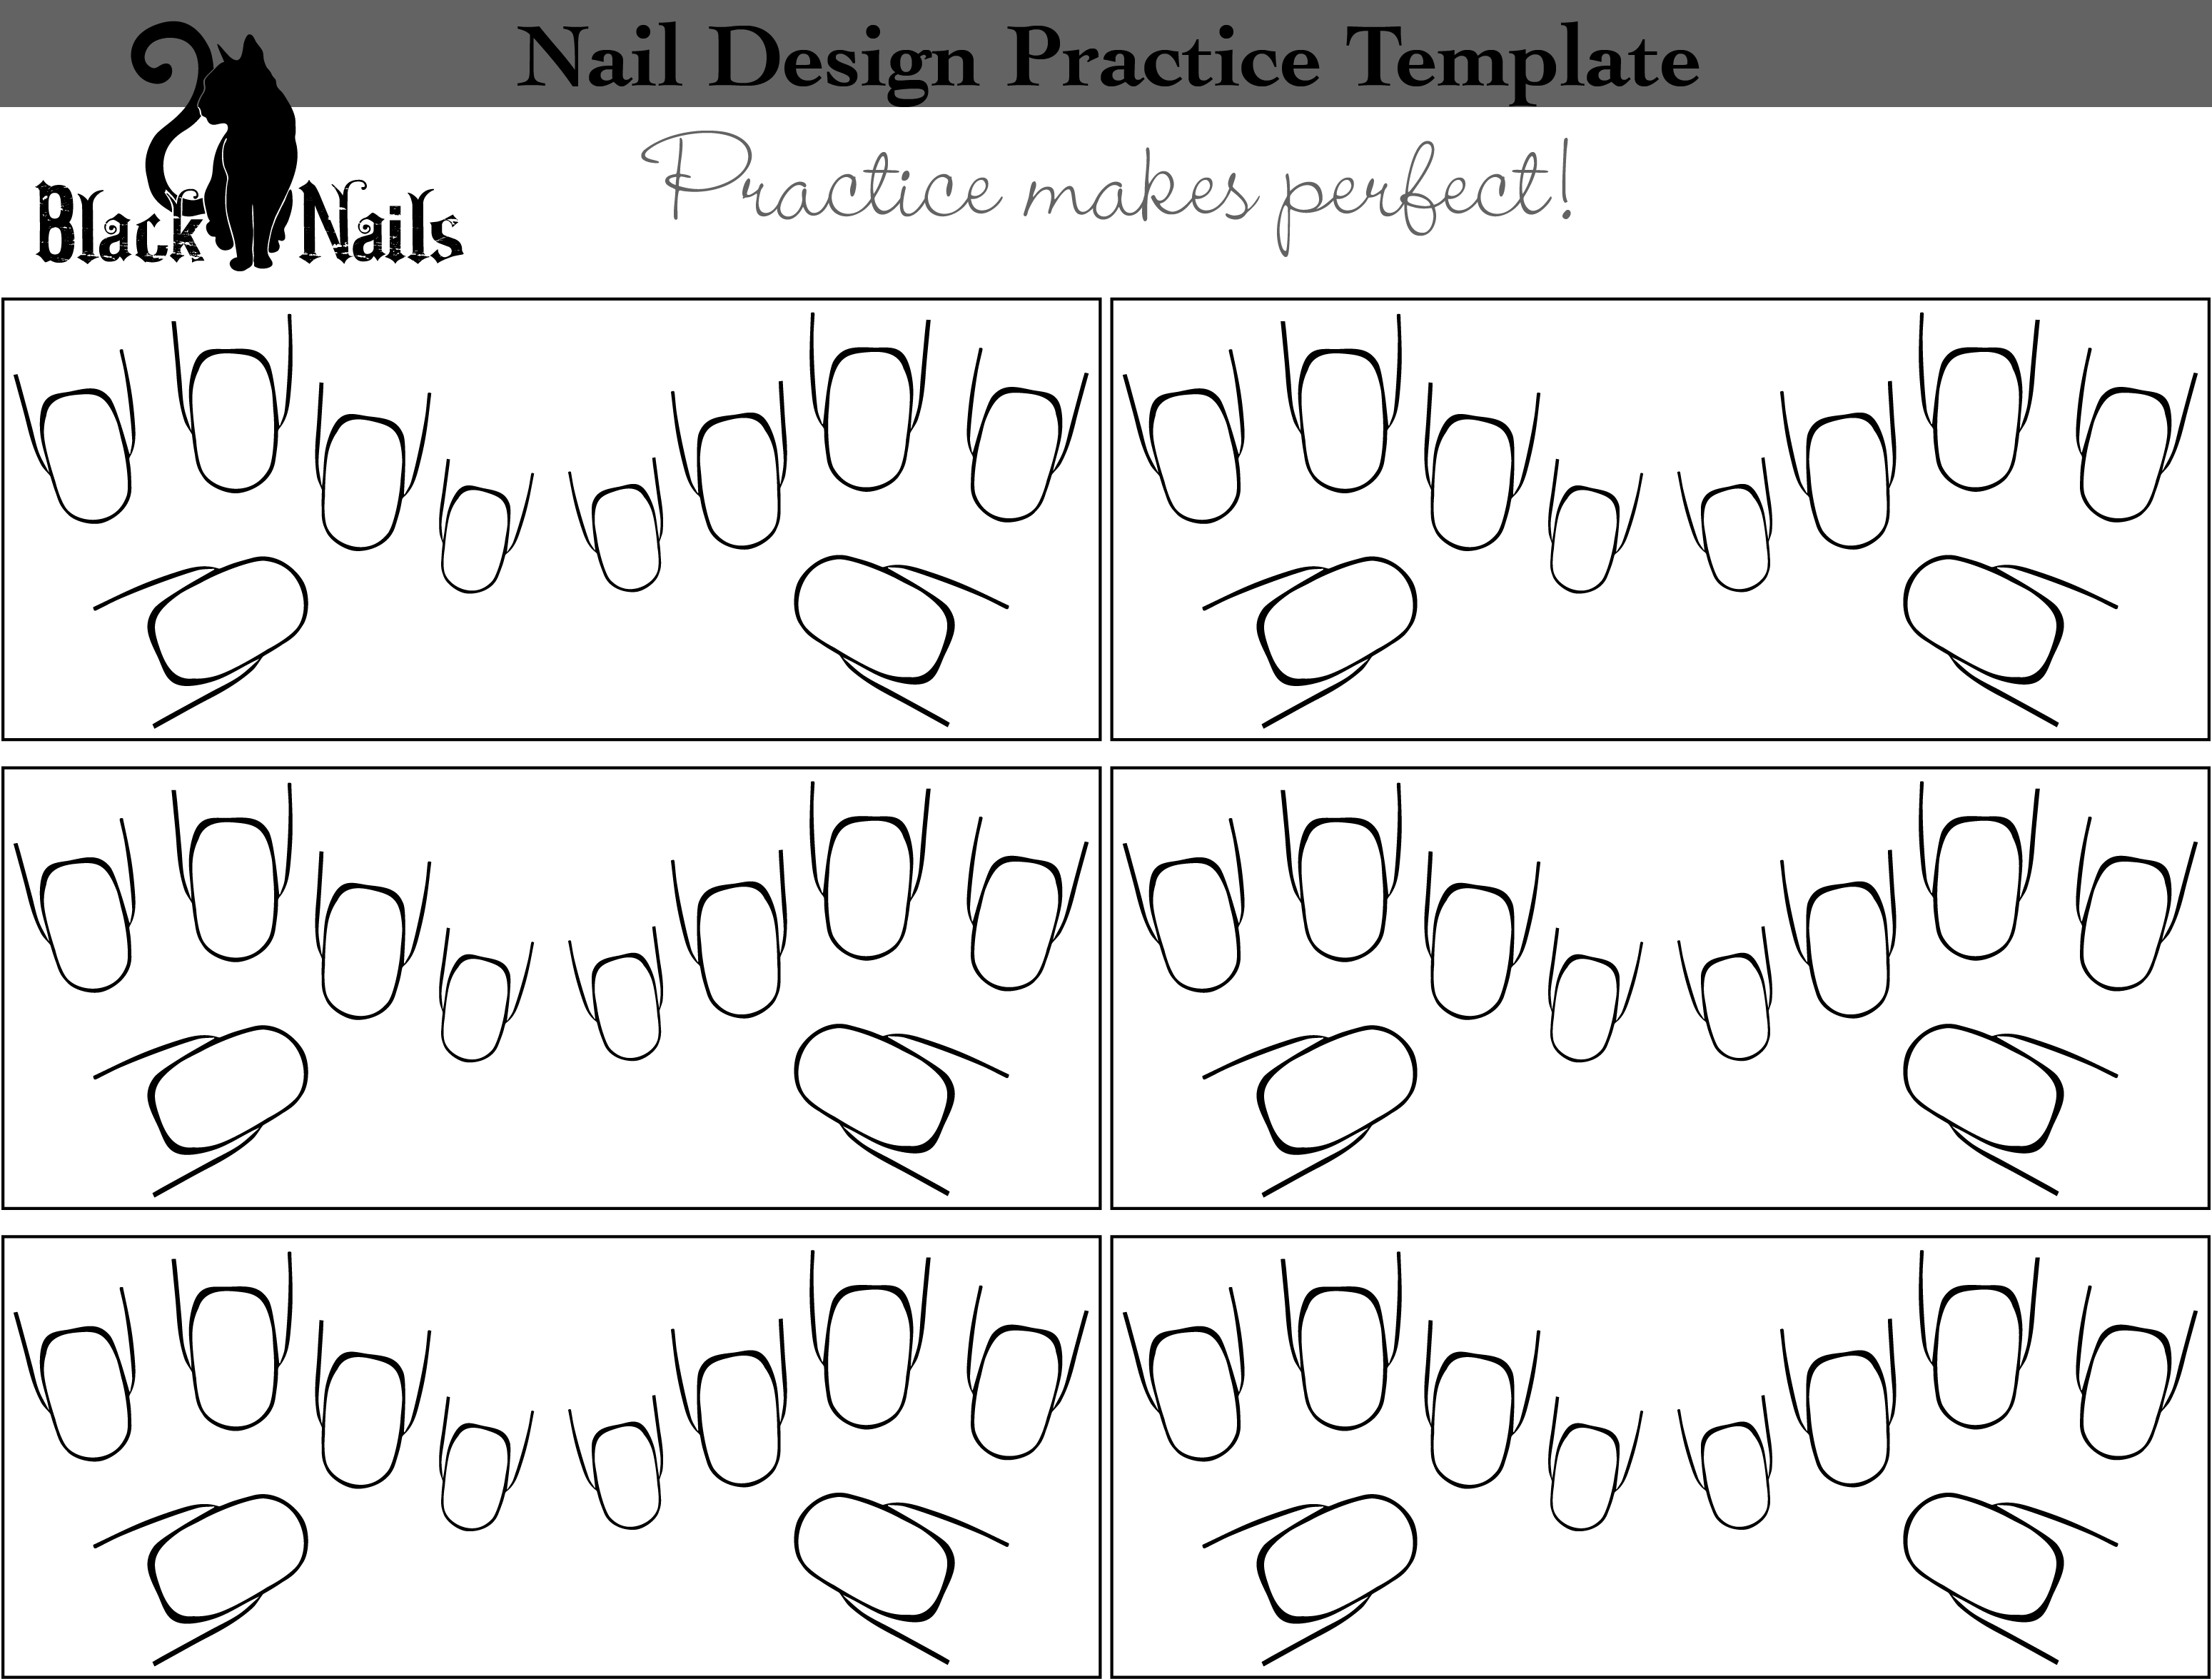 Nail Art Design Practice Sheet - Full Hand Oval